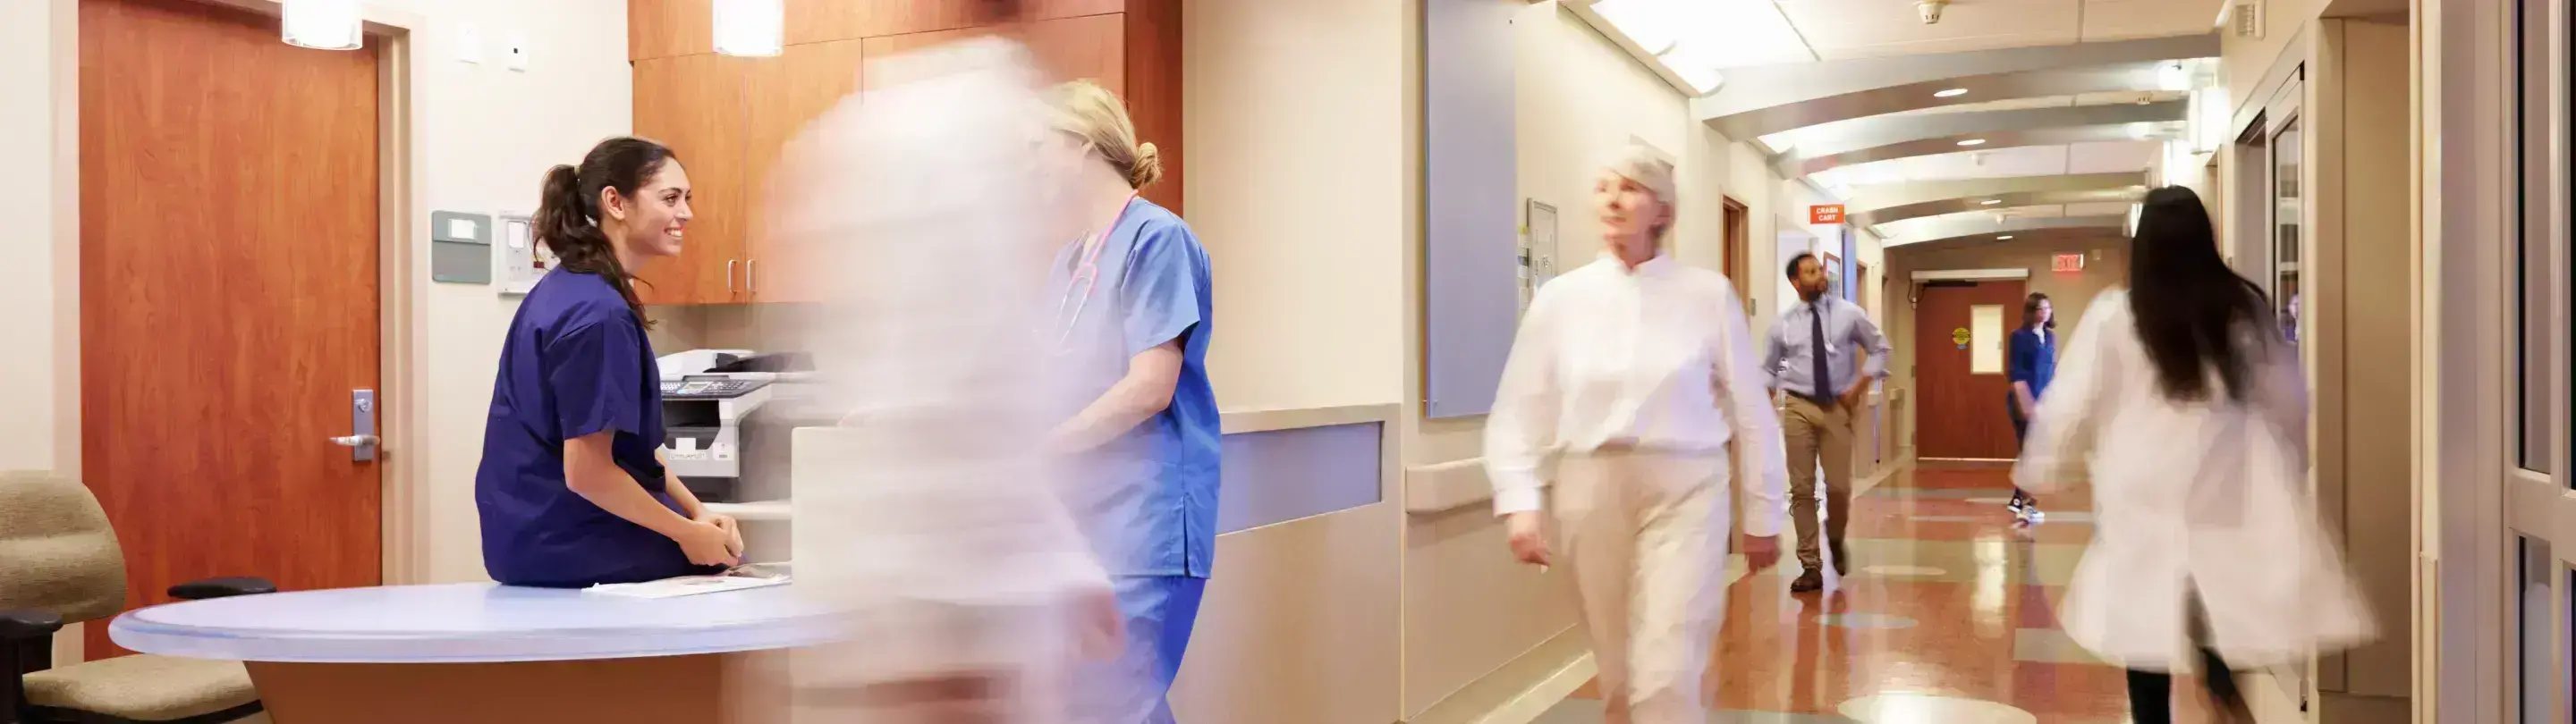 Doctors in motion in hospital hallway